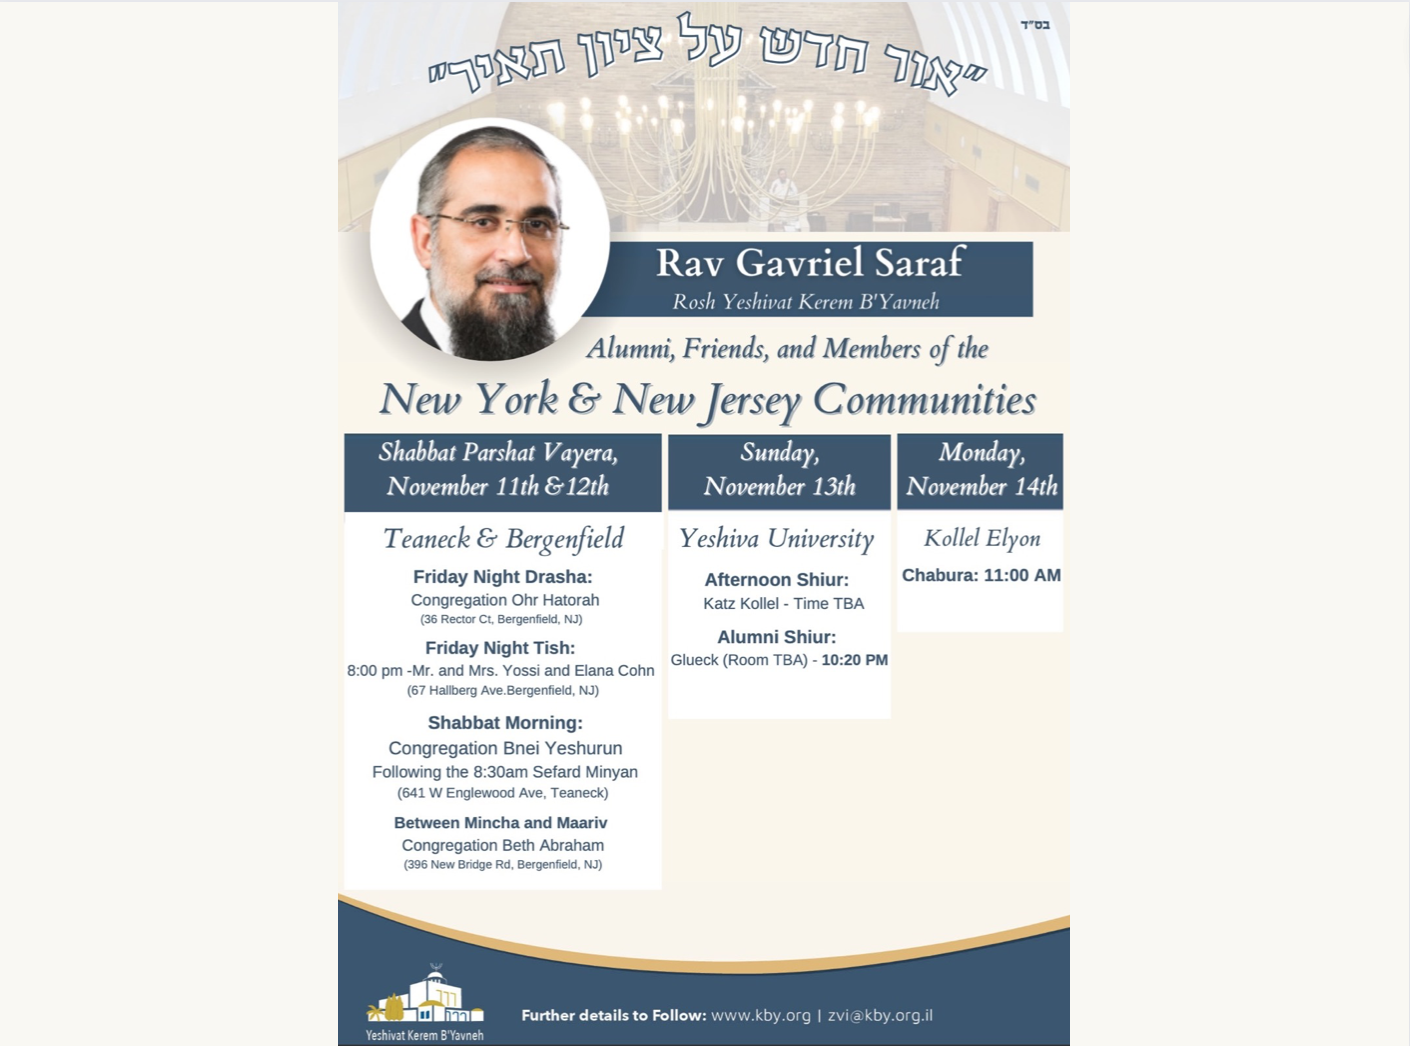 New York & New Jersey Communities